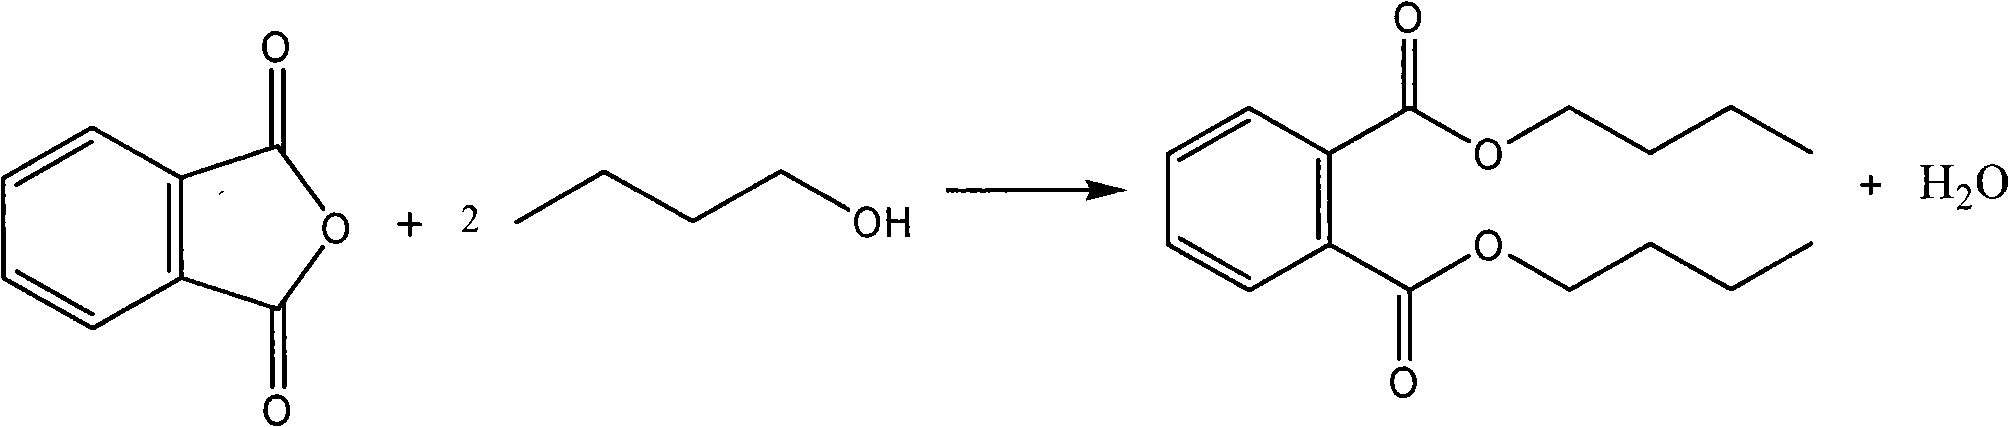 Method for preparing dibutyl phthalate